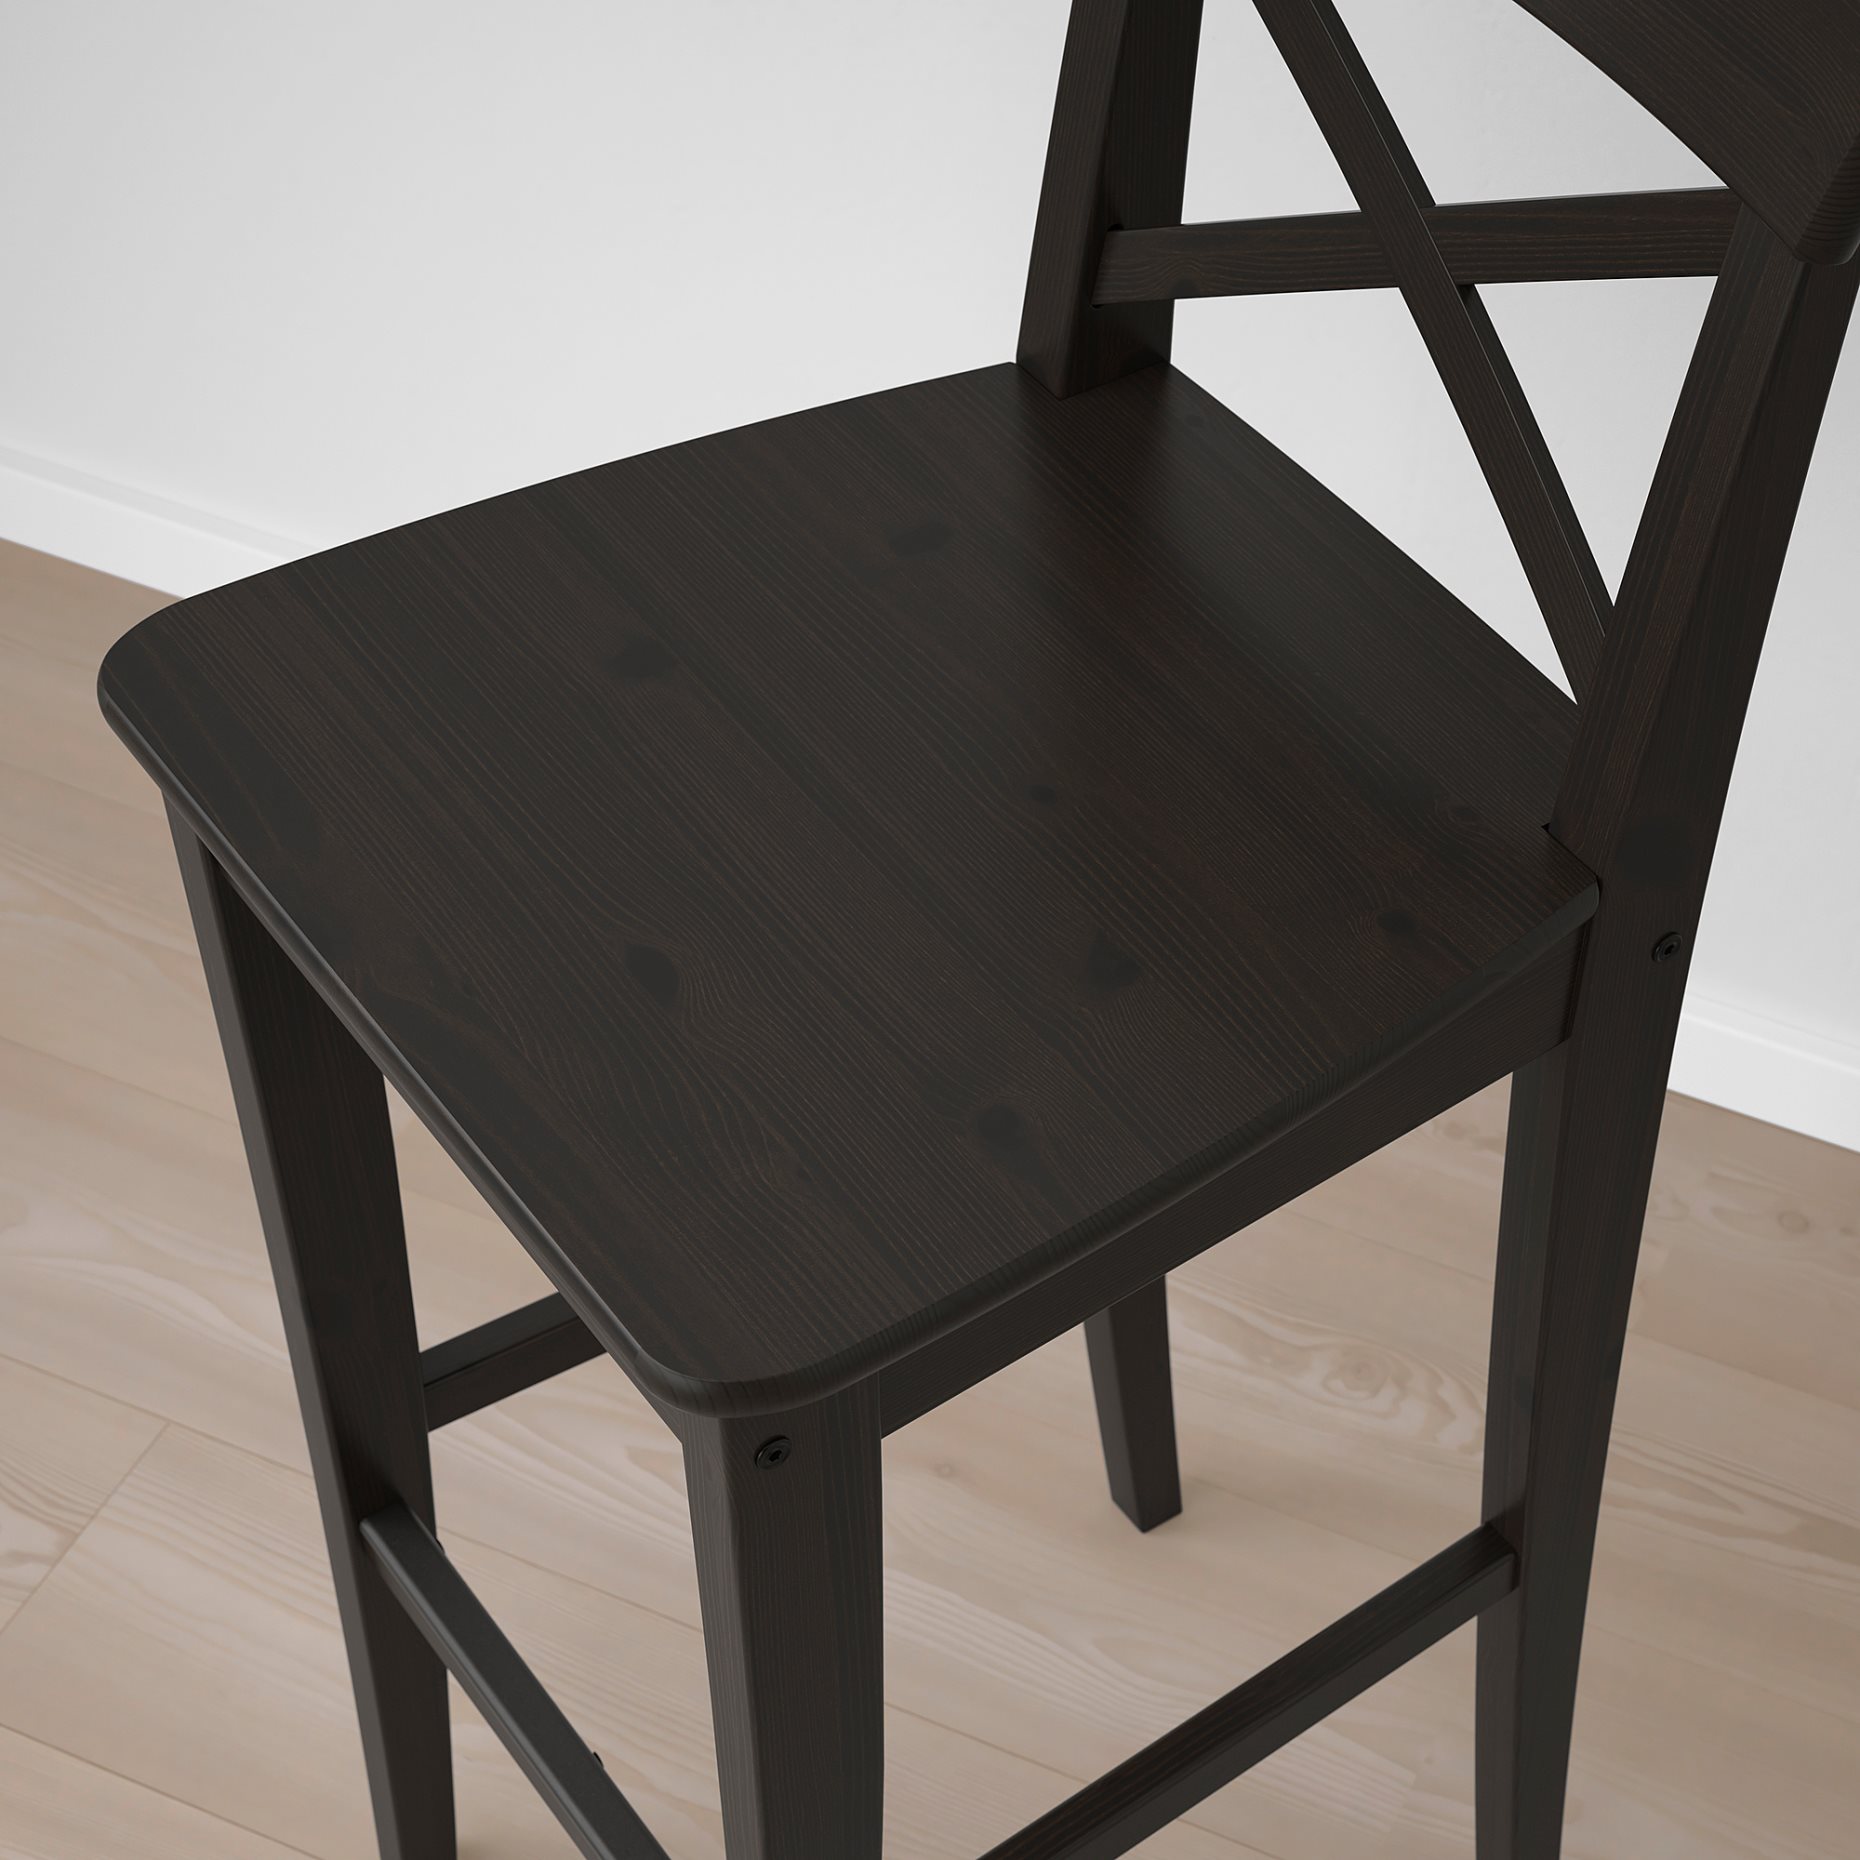 INGOLF, bar stool with backrest, 902.485.15